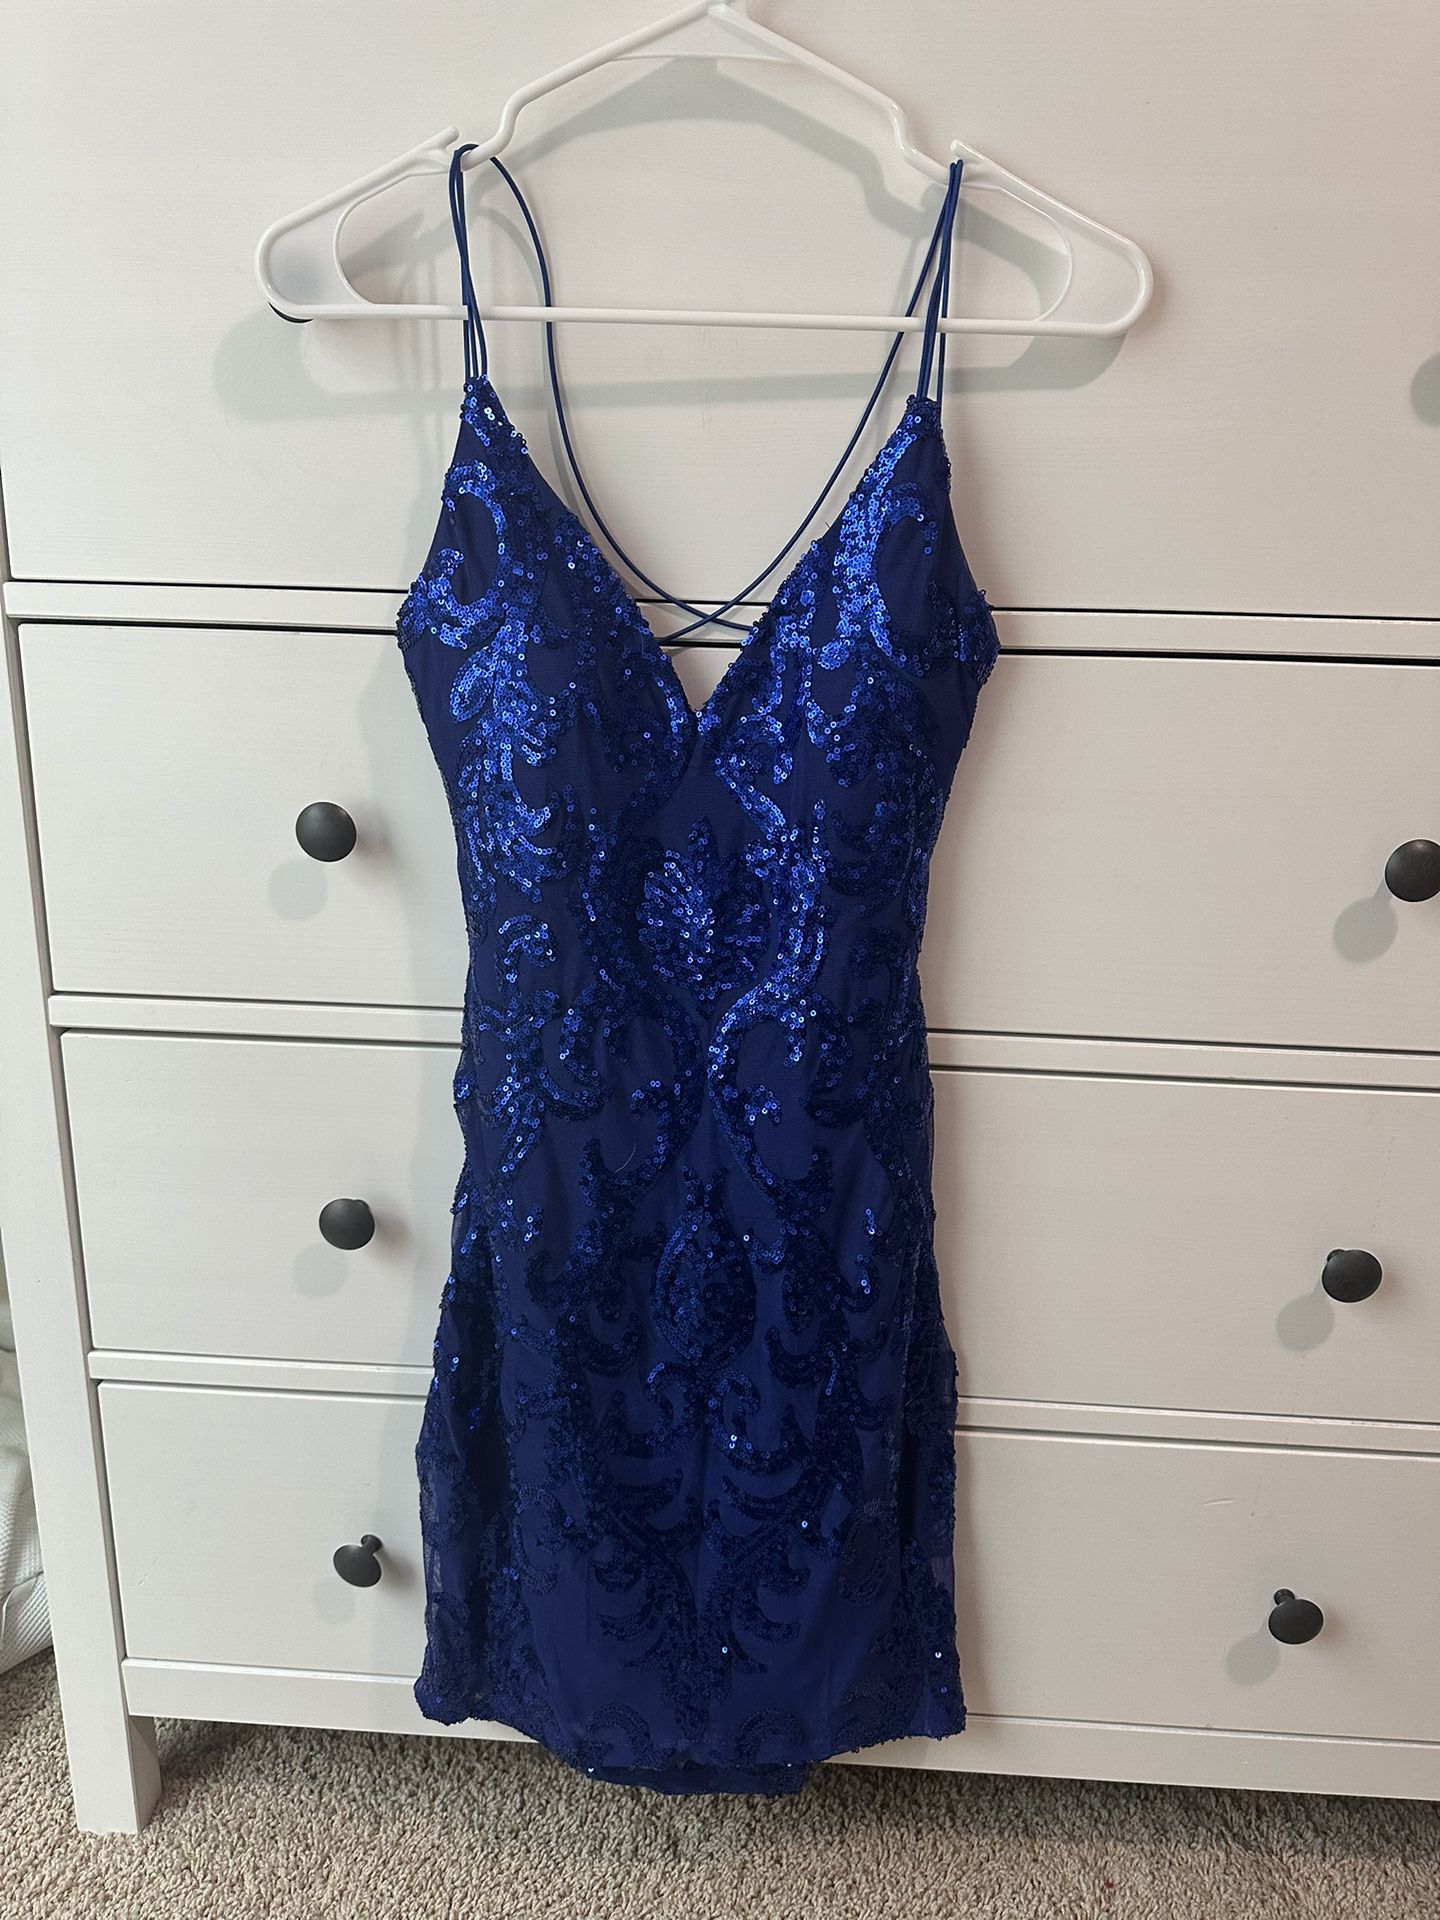 Blue Windsor Dress, Size M 